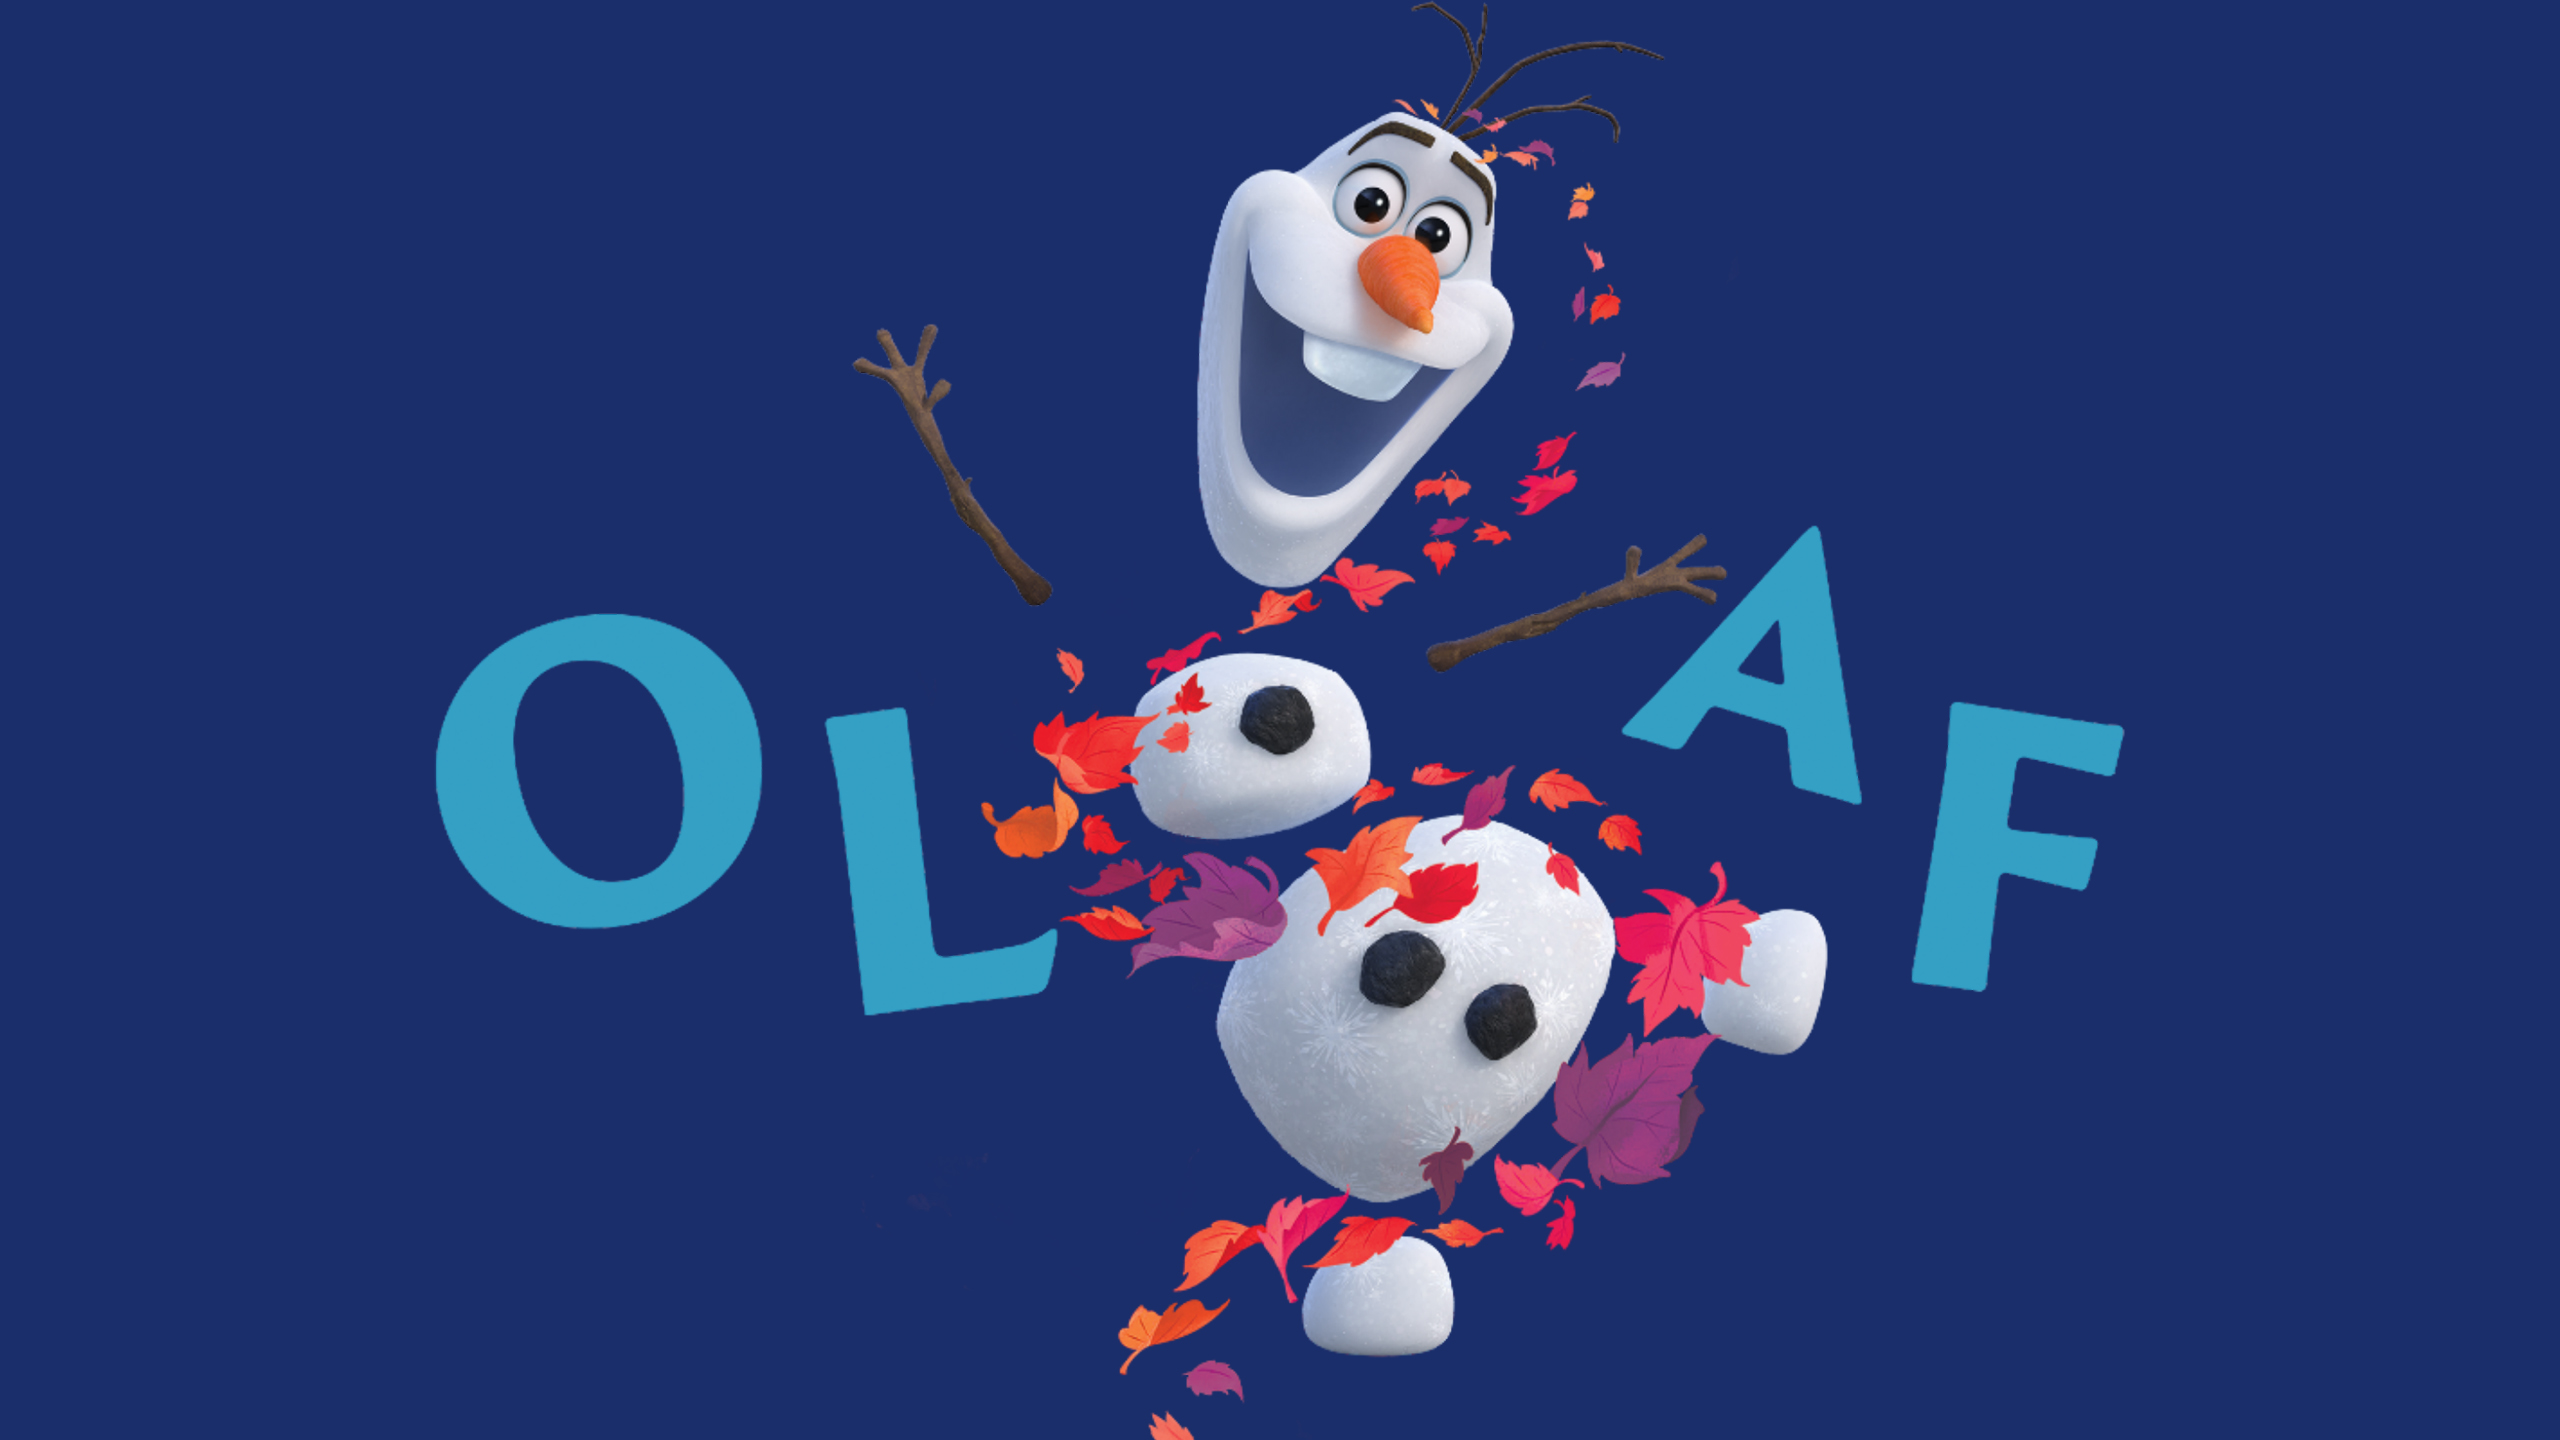 Frozen 2 Wallpaper - Olaf and Sven Wallpaper (43116033) - Fanpop